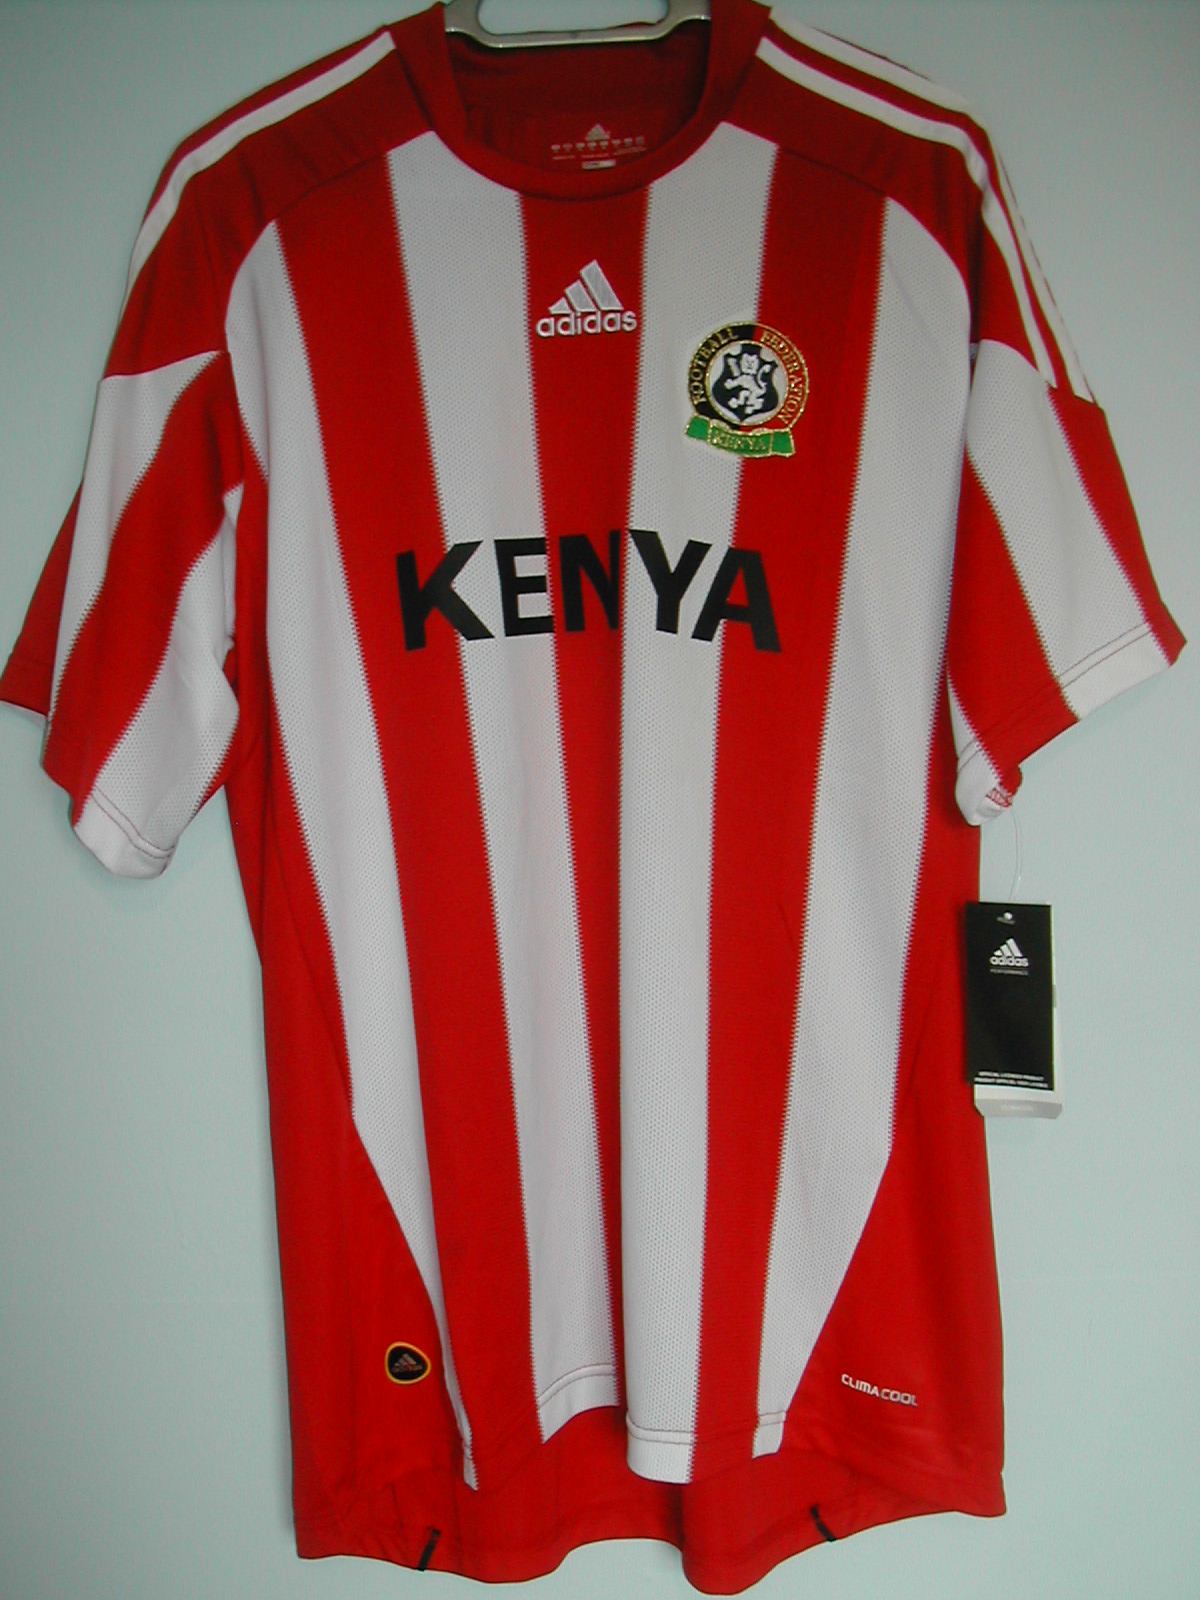 Download My Football Shirt Project: A new Kenya shirt